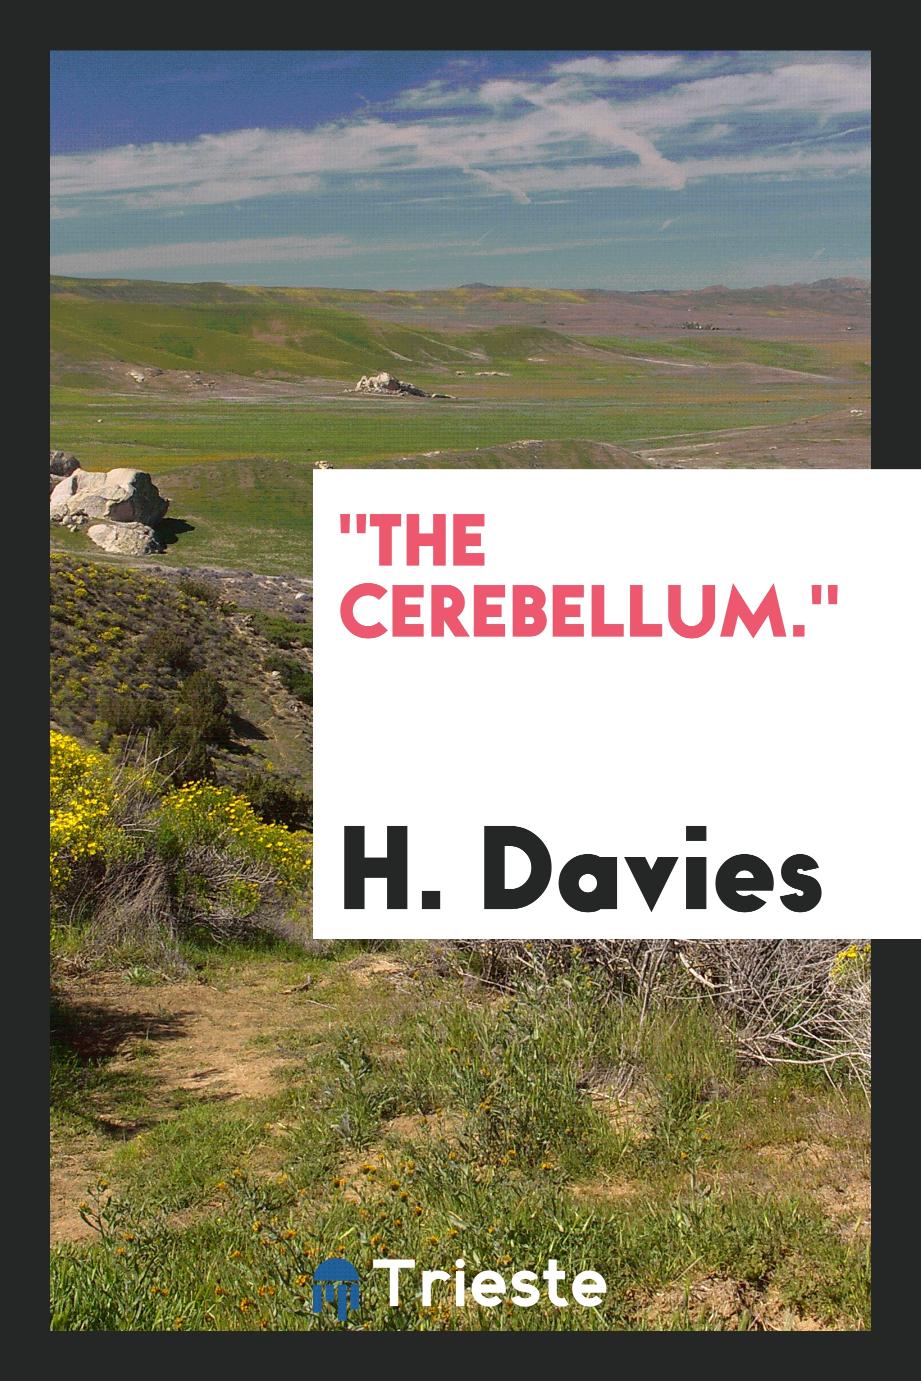 "The Cerebellum."